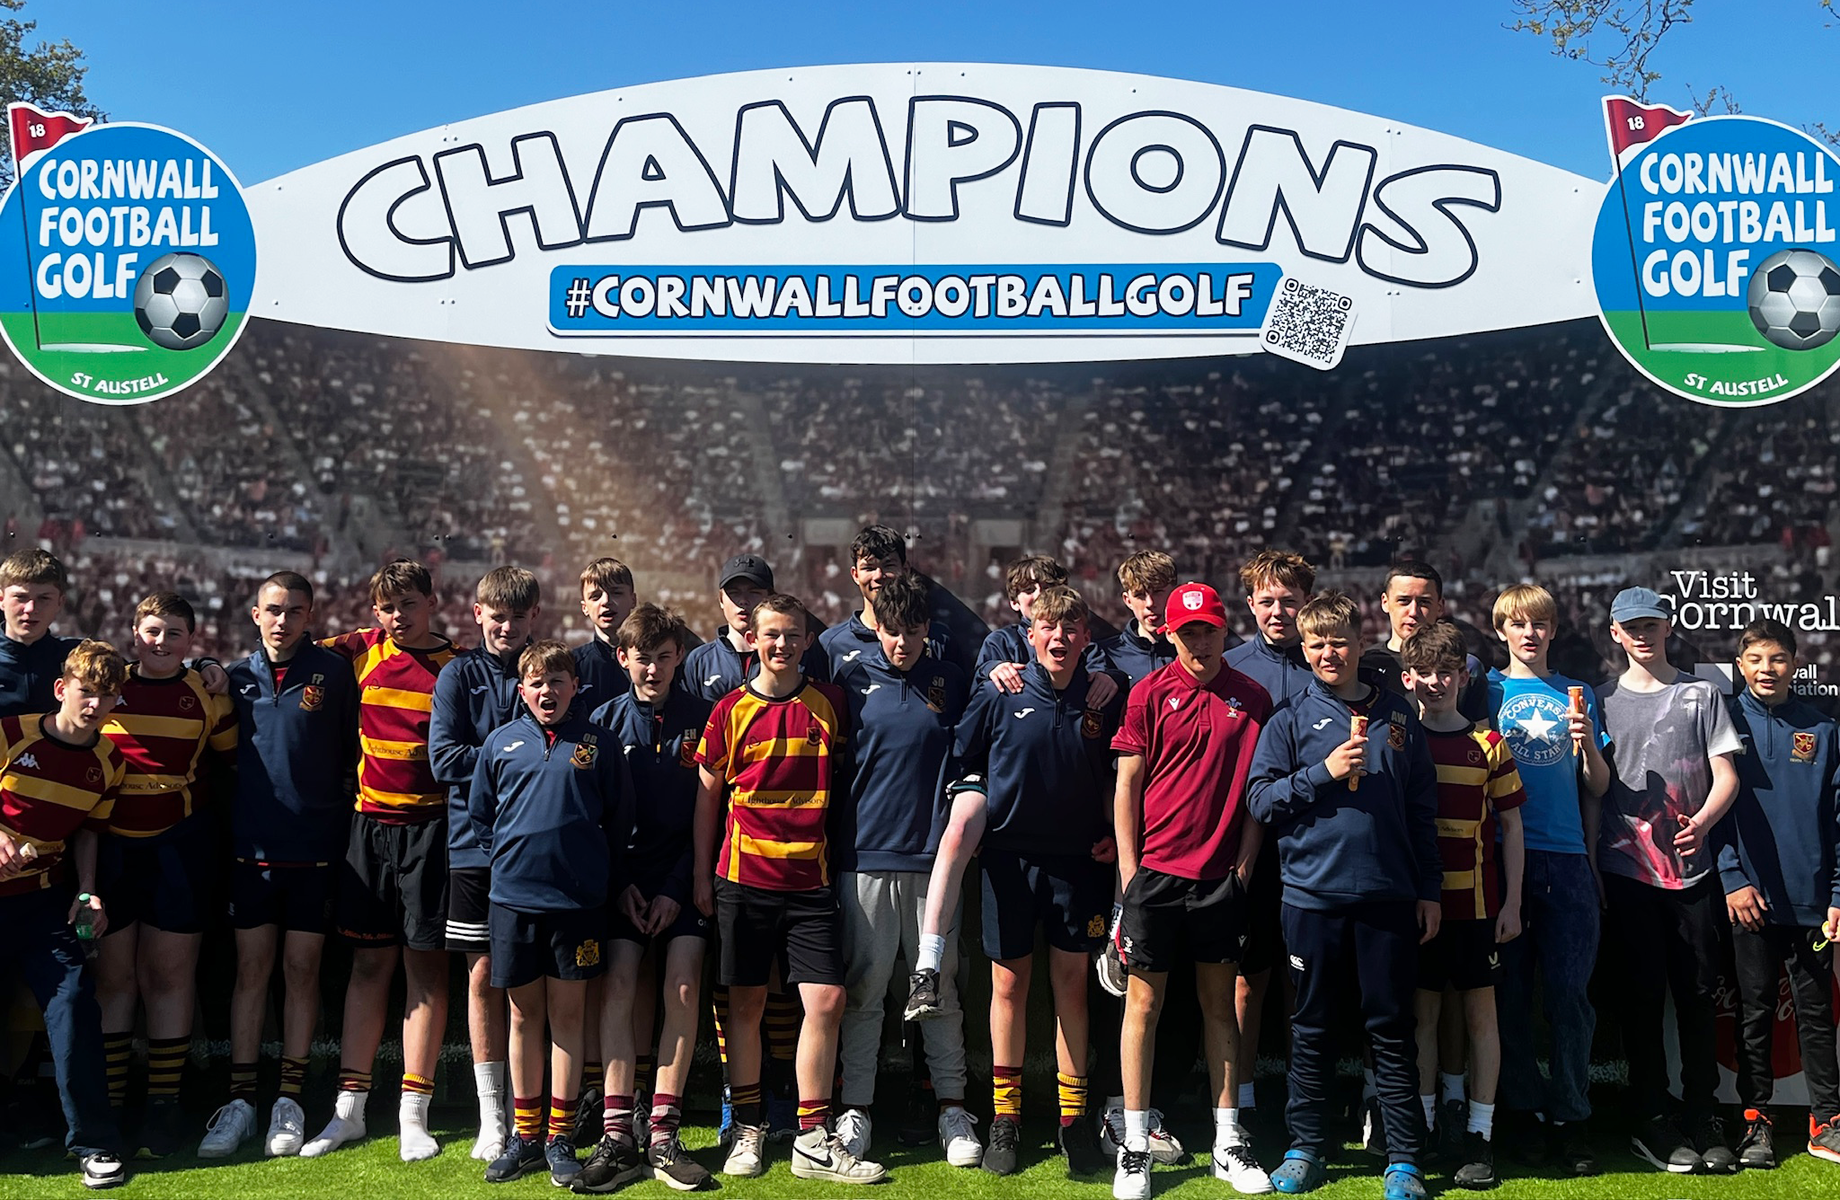 Team Building at Cornwall footballGolf